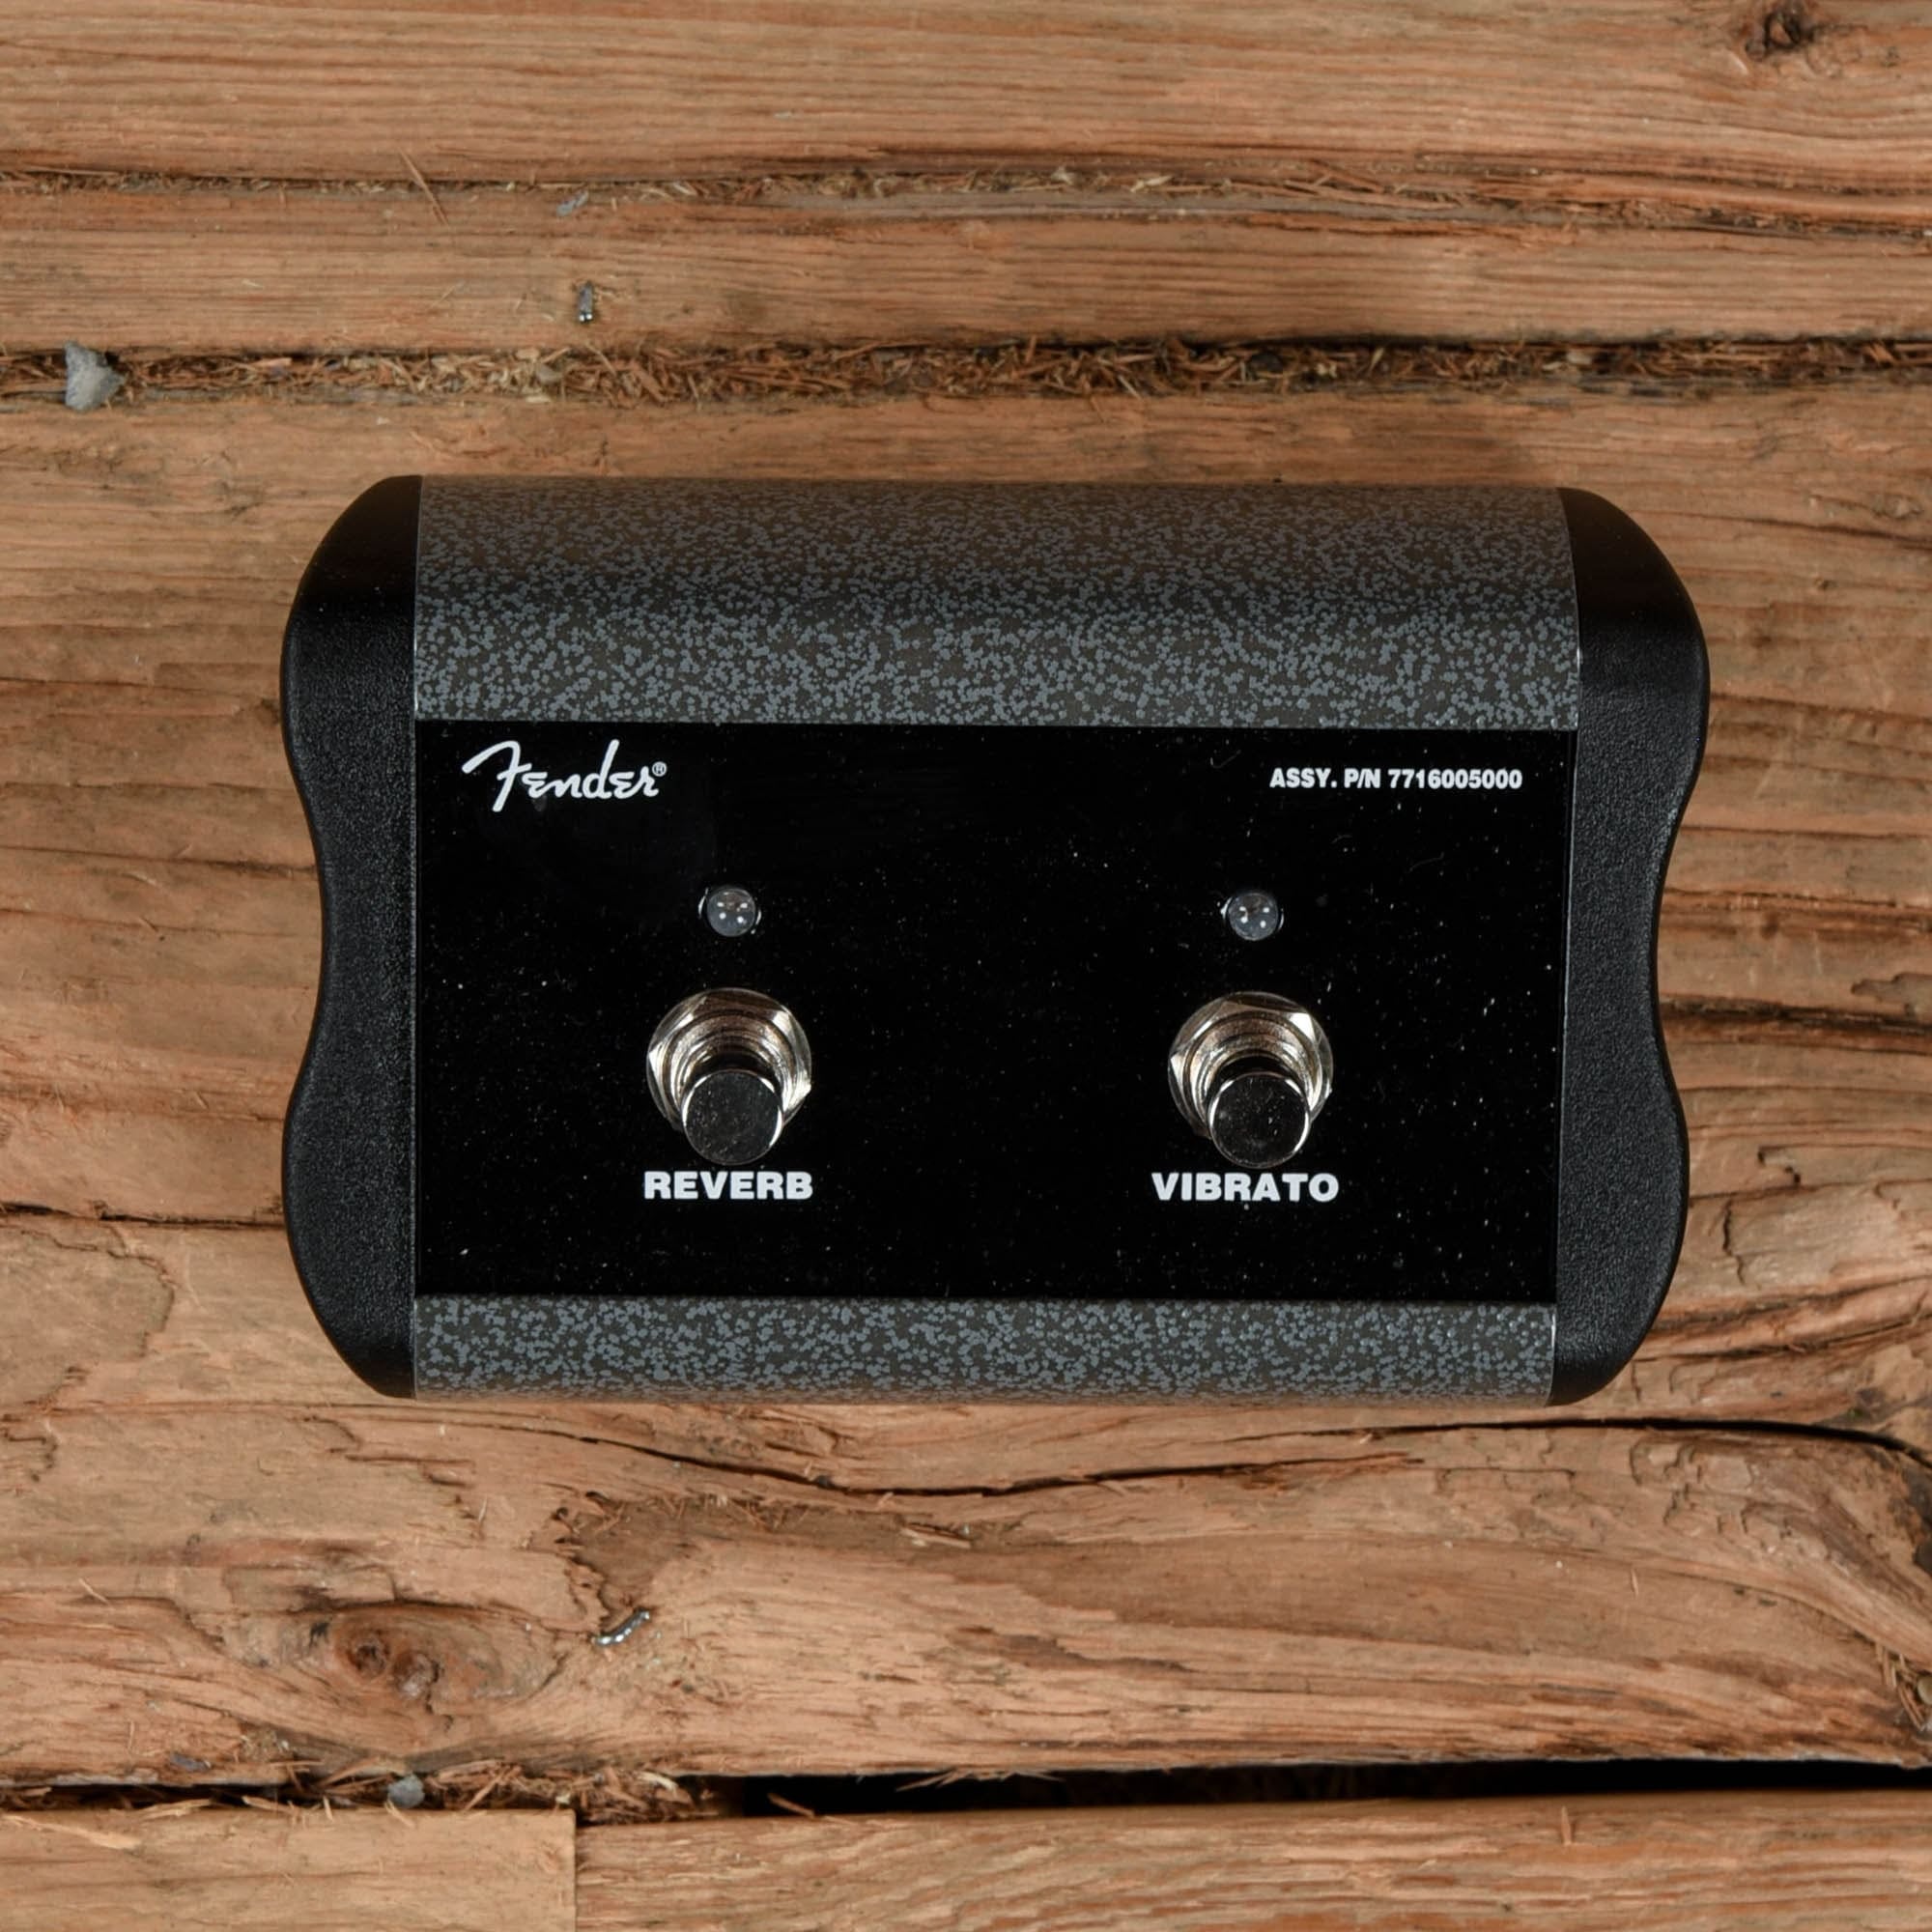 Fender Tone Master Deluxe Reverb 2-Channel 22-Watt 1x12